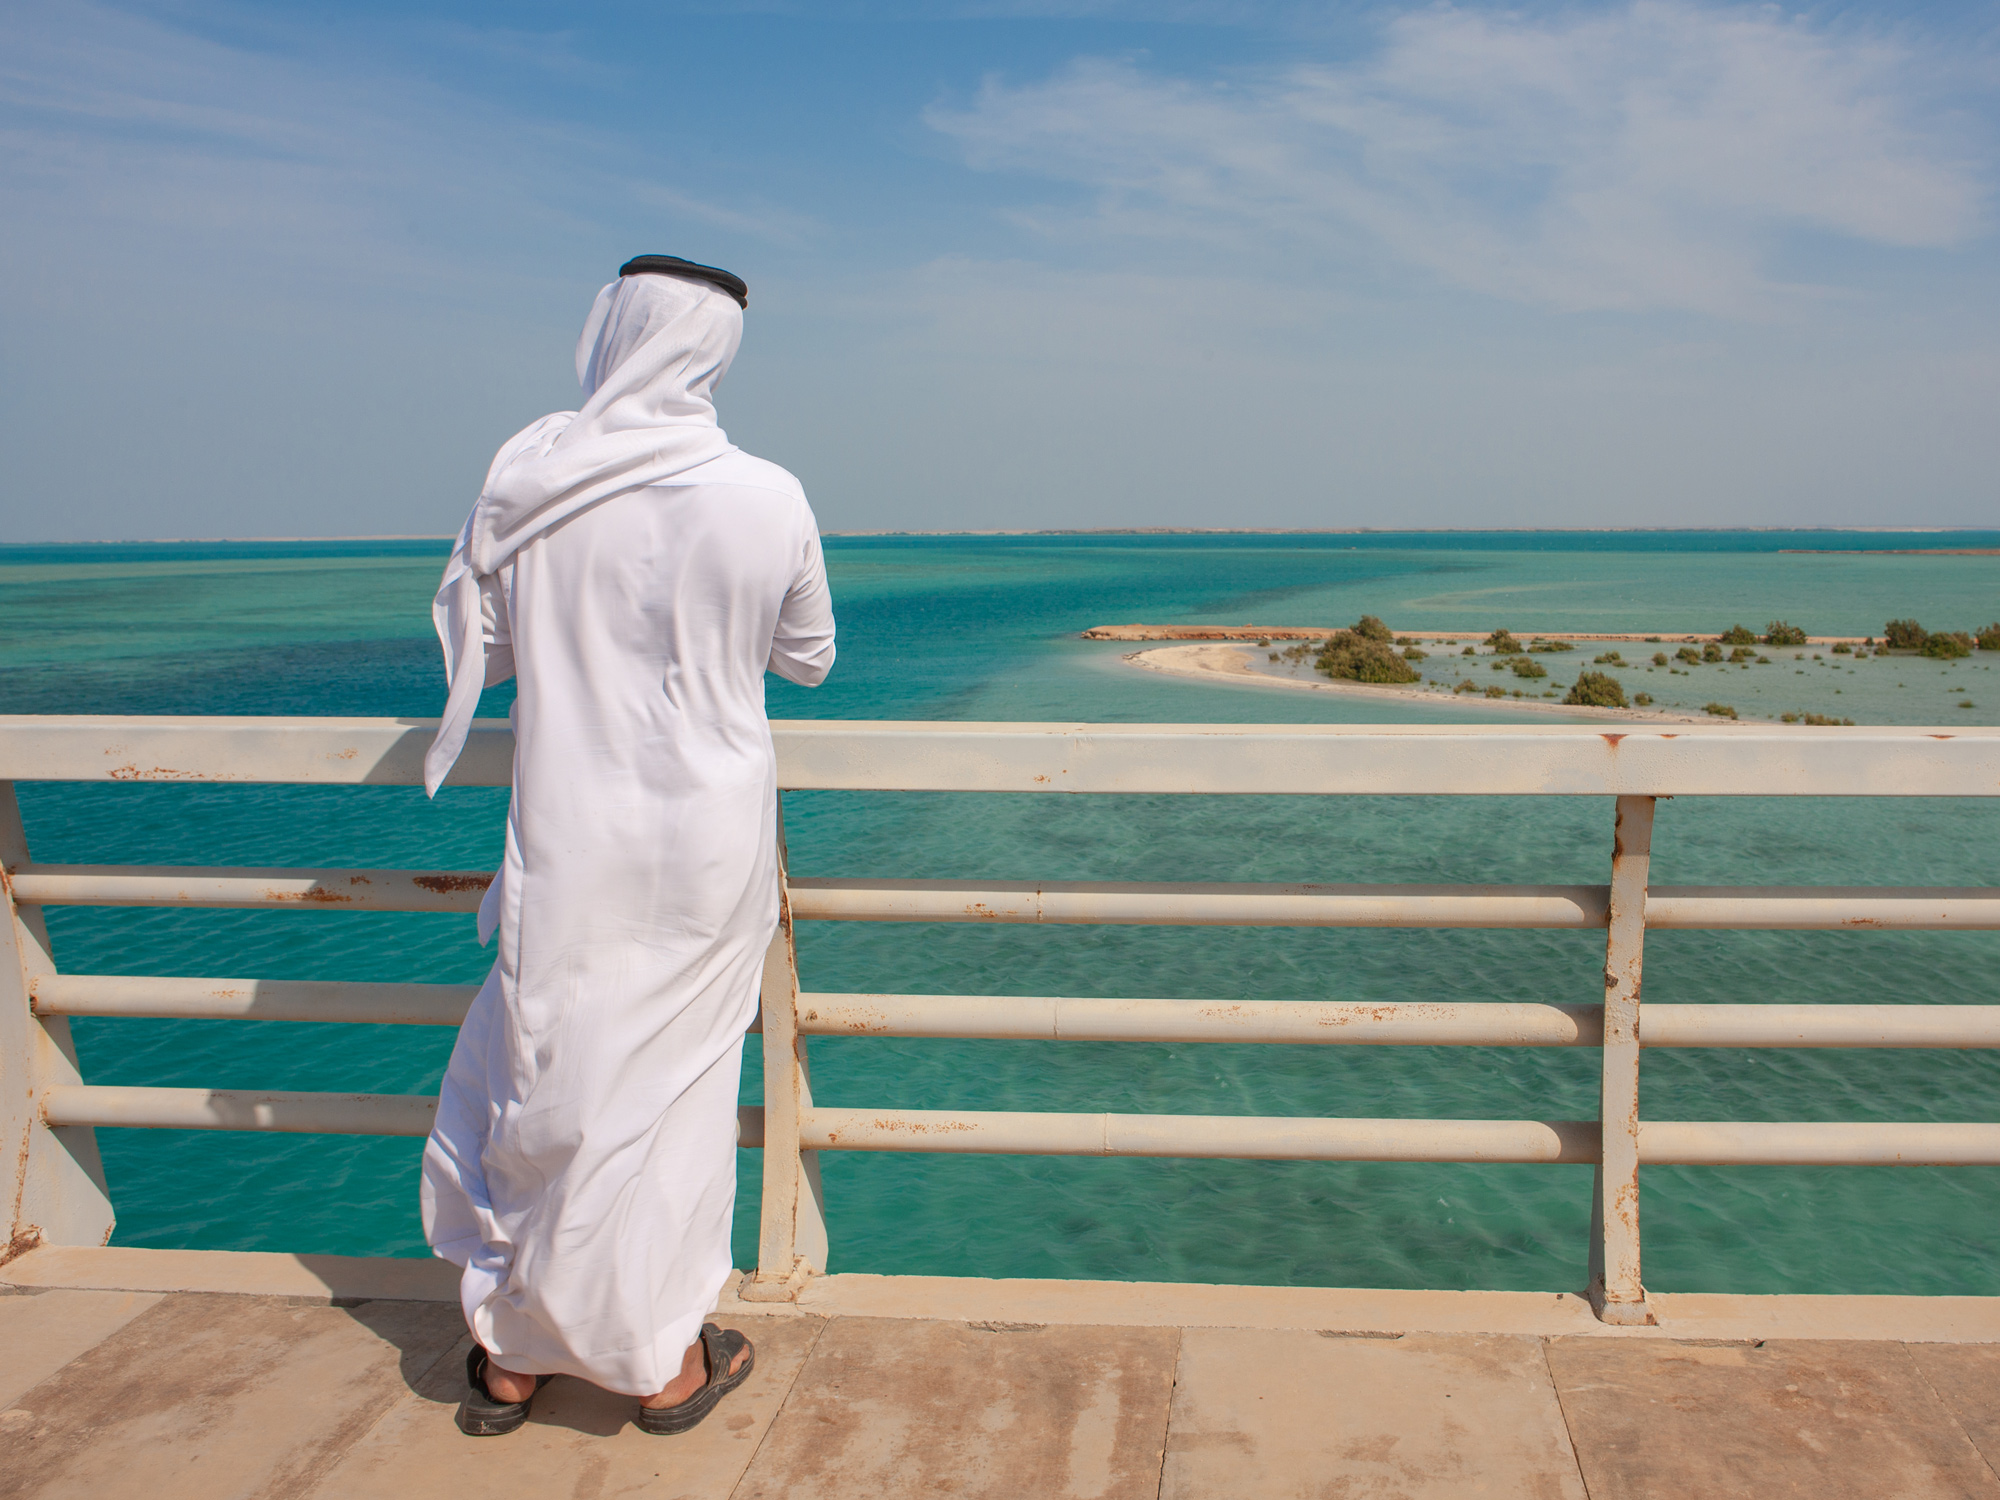 Saudi Arabia Seeks Private Money Transform Red Sea Beaches - Bloomberg